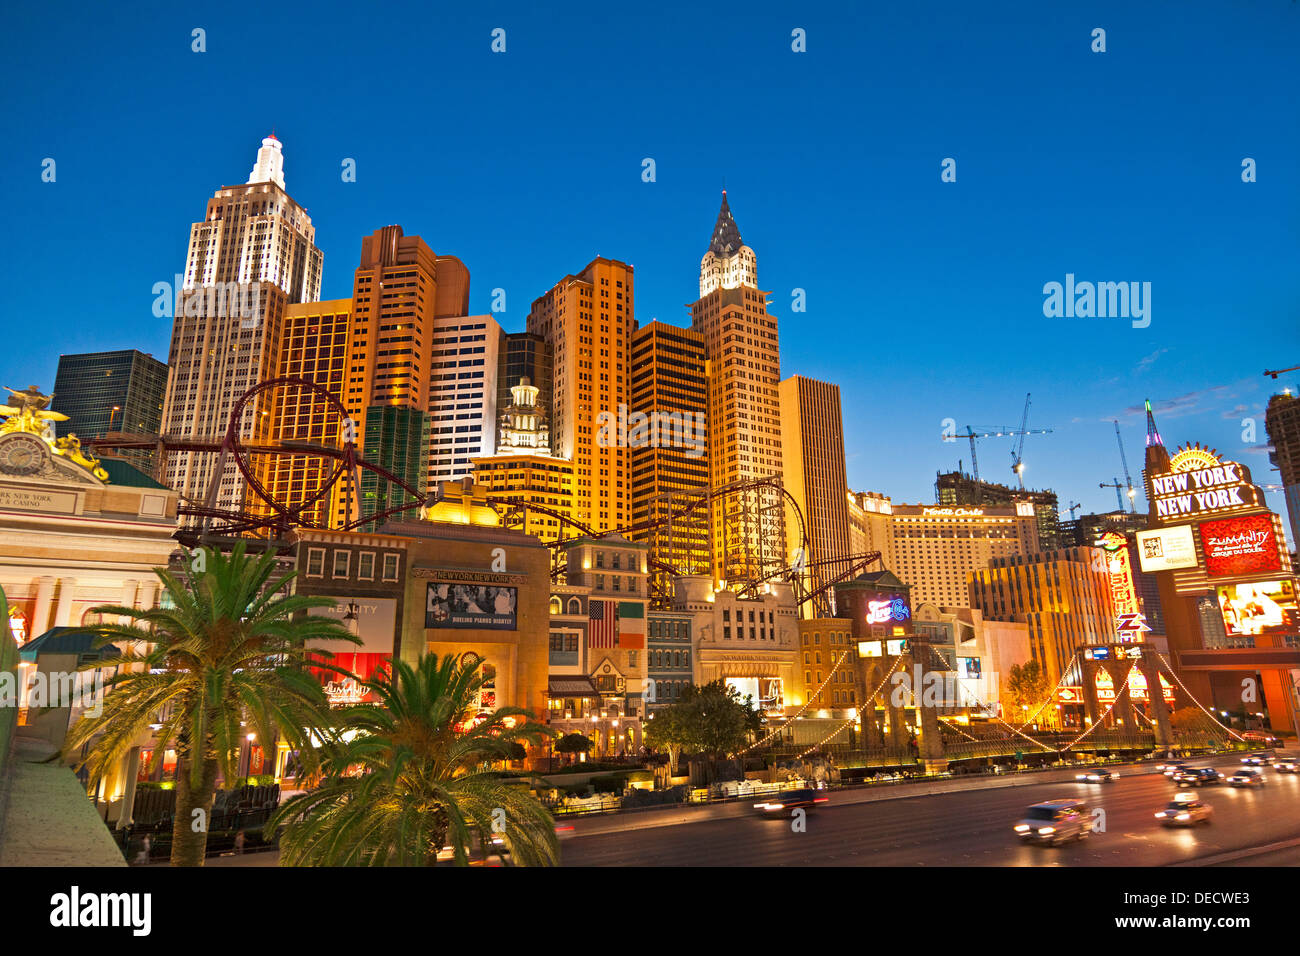 New York-New York Hotel & Casino, Las Vegas, Nevada, USA at dusk. JMH5412 Stock Photo